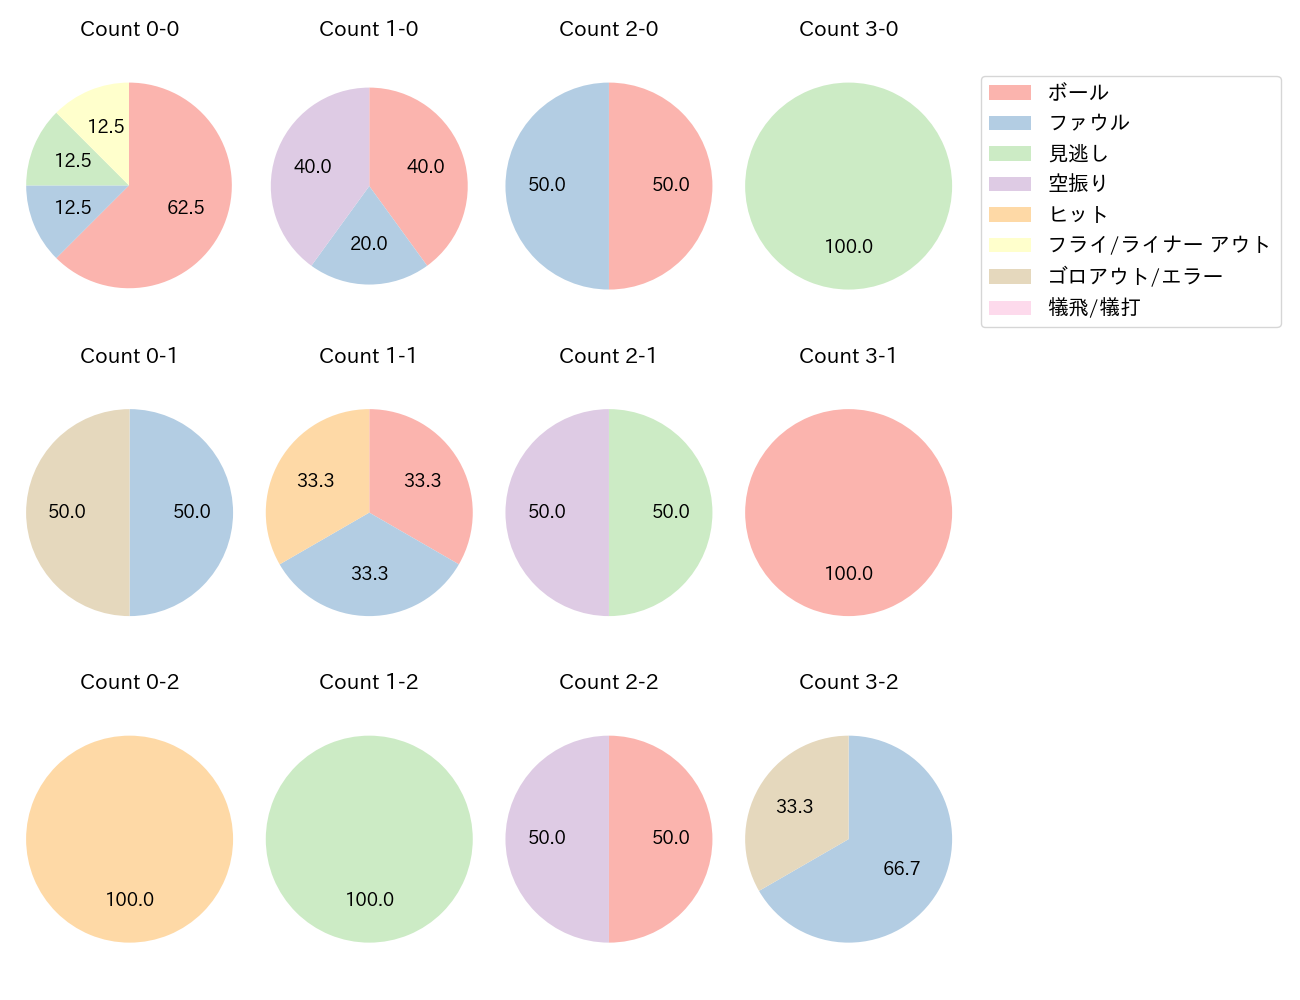 神里 和毅の球数分布(2021年8月)